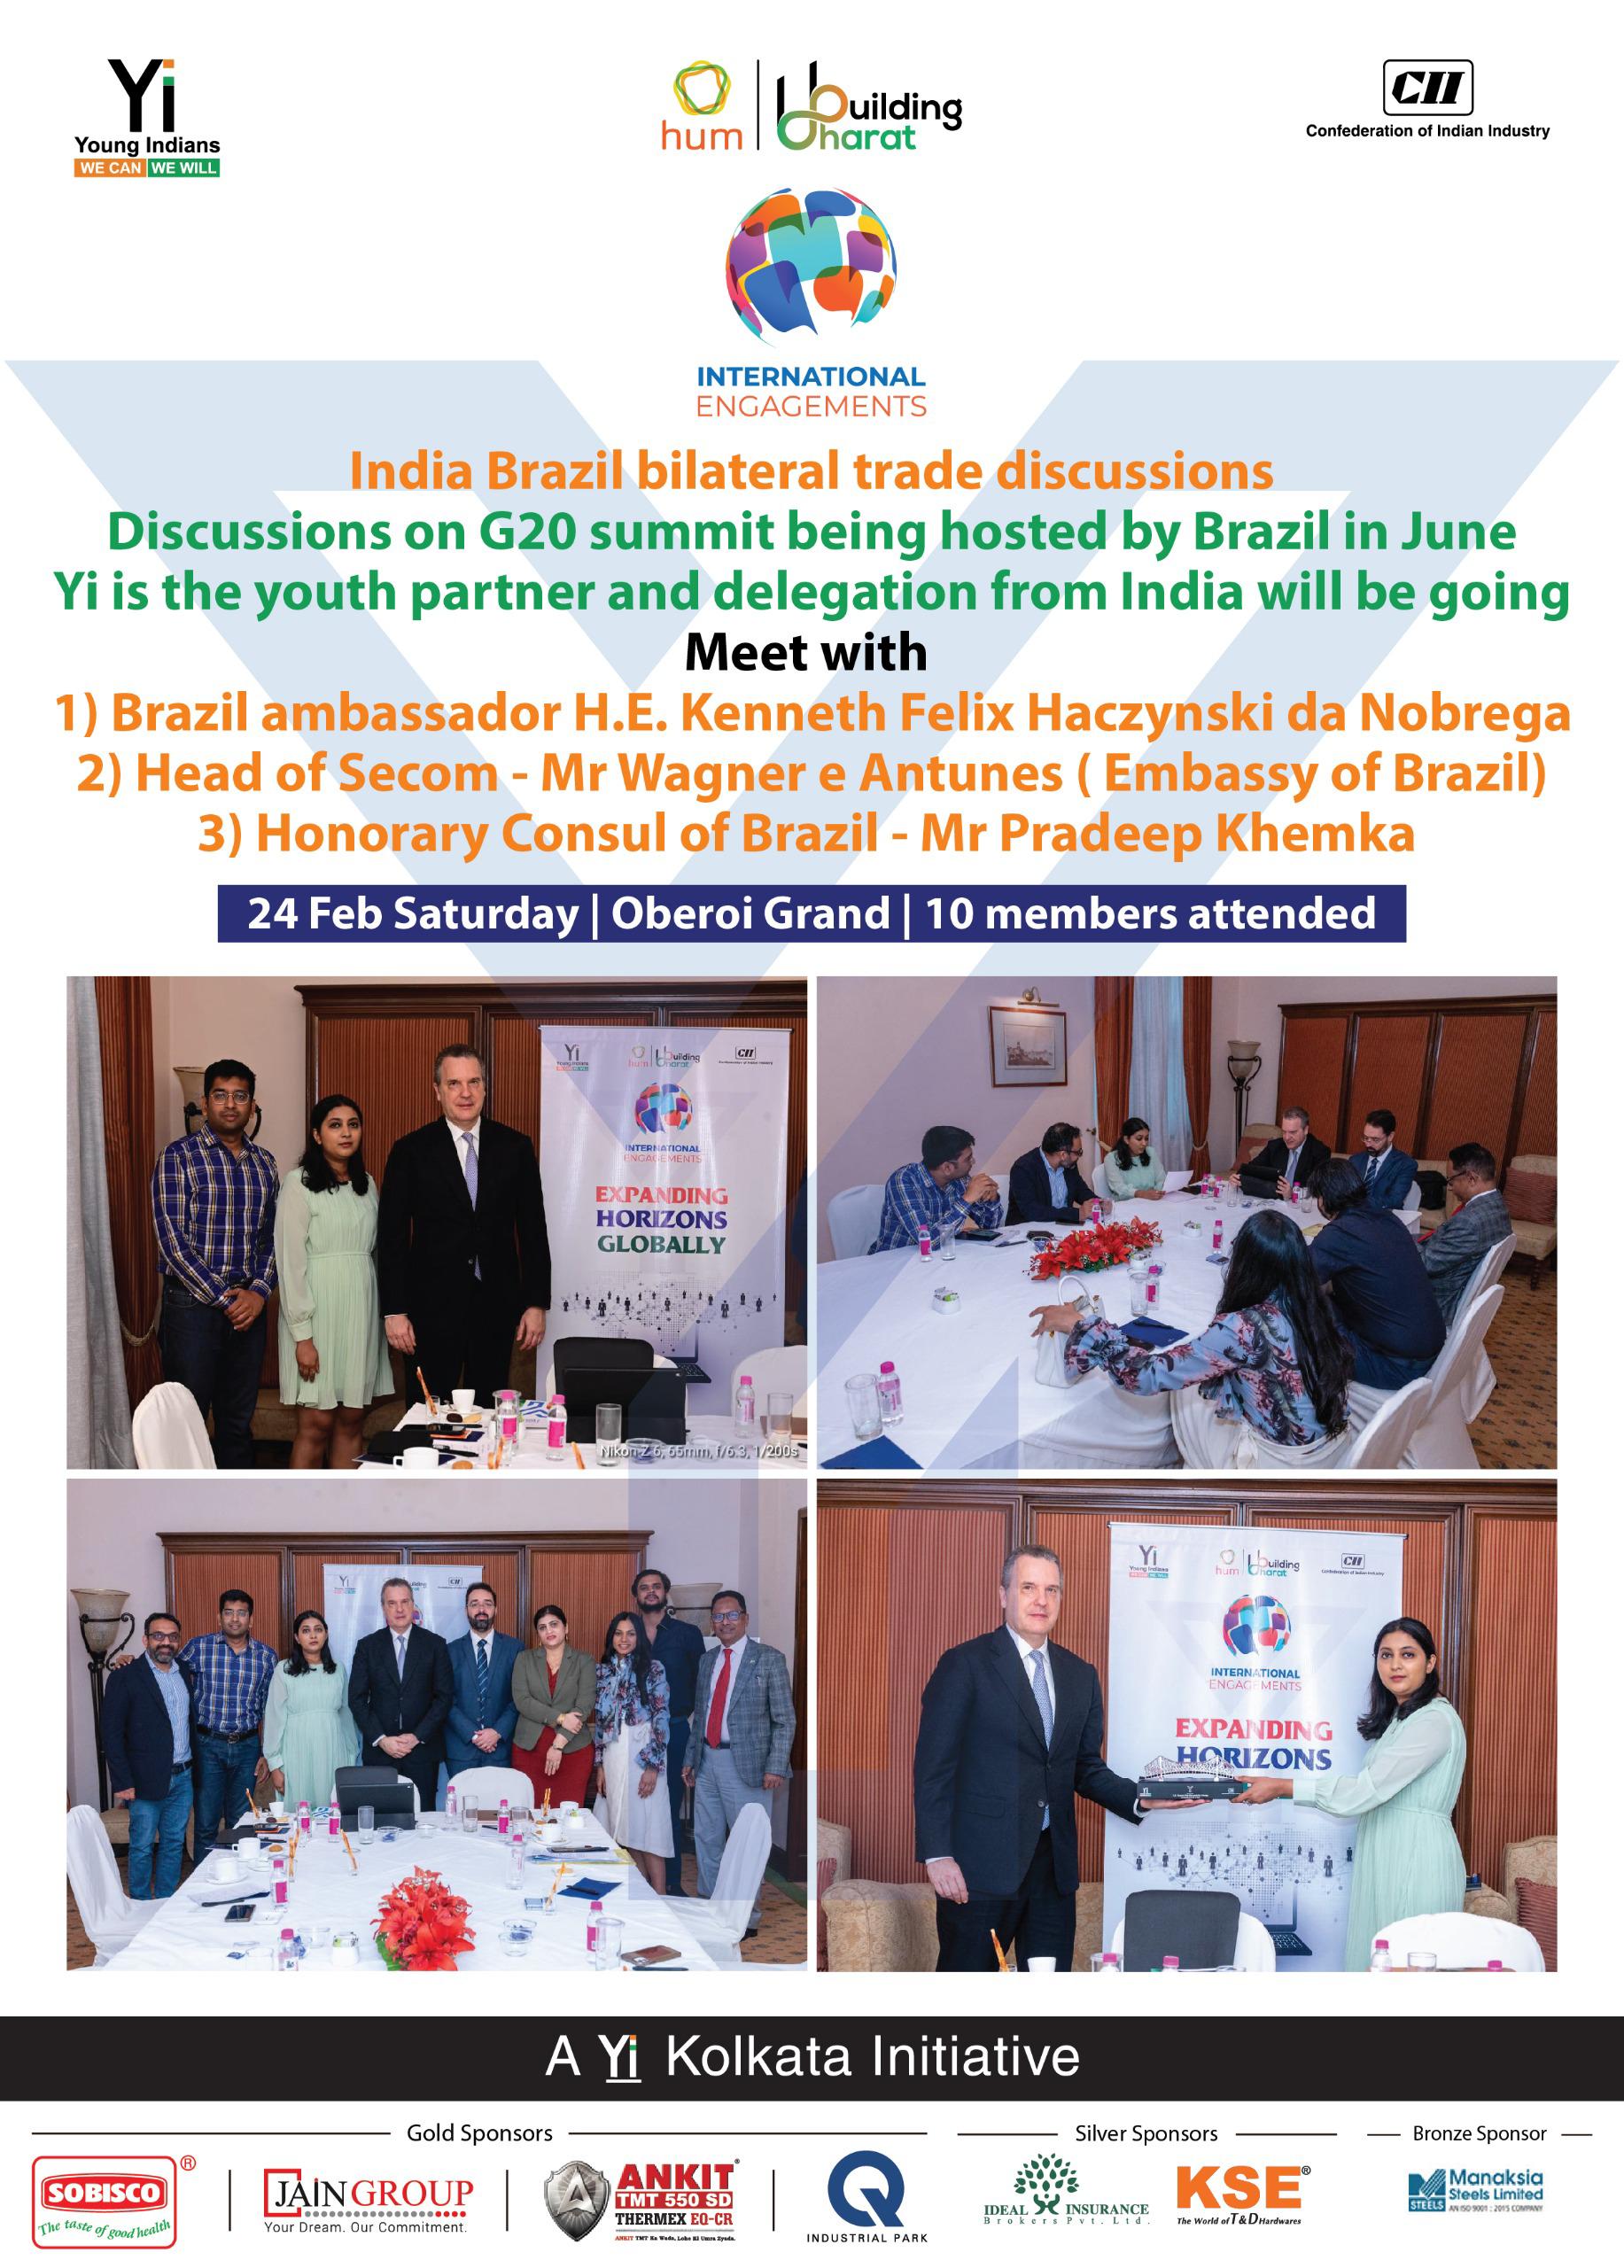 Yi24 | International Engagement - Meeting with Ambassador of Brazil to India and Bhutan